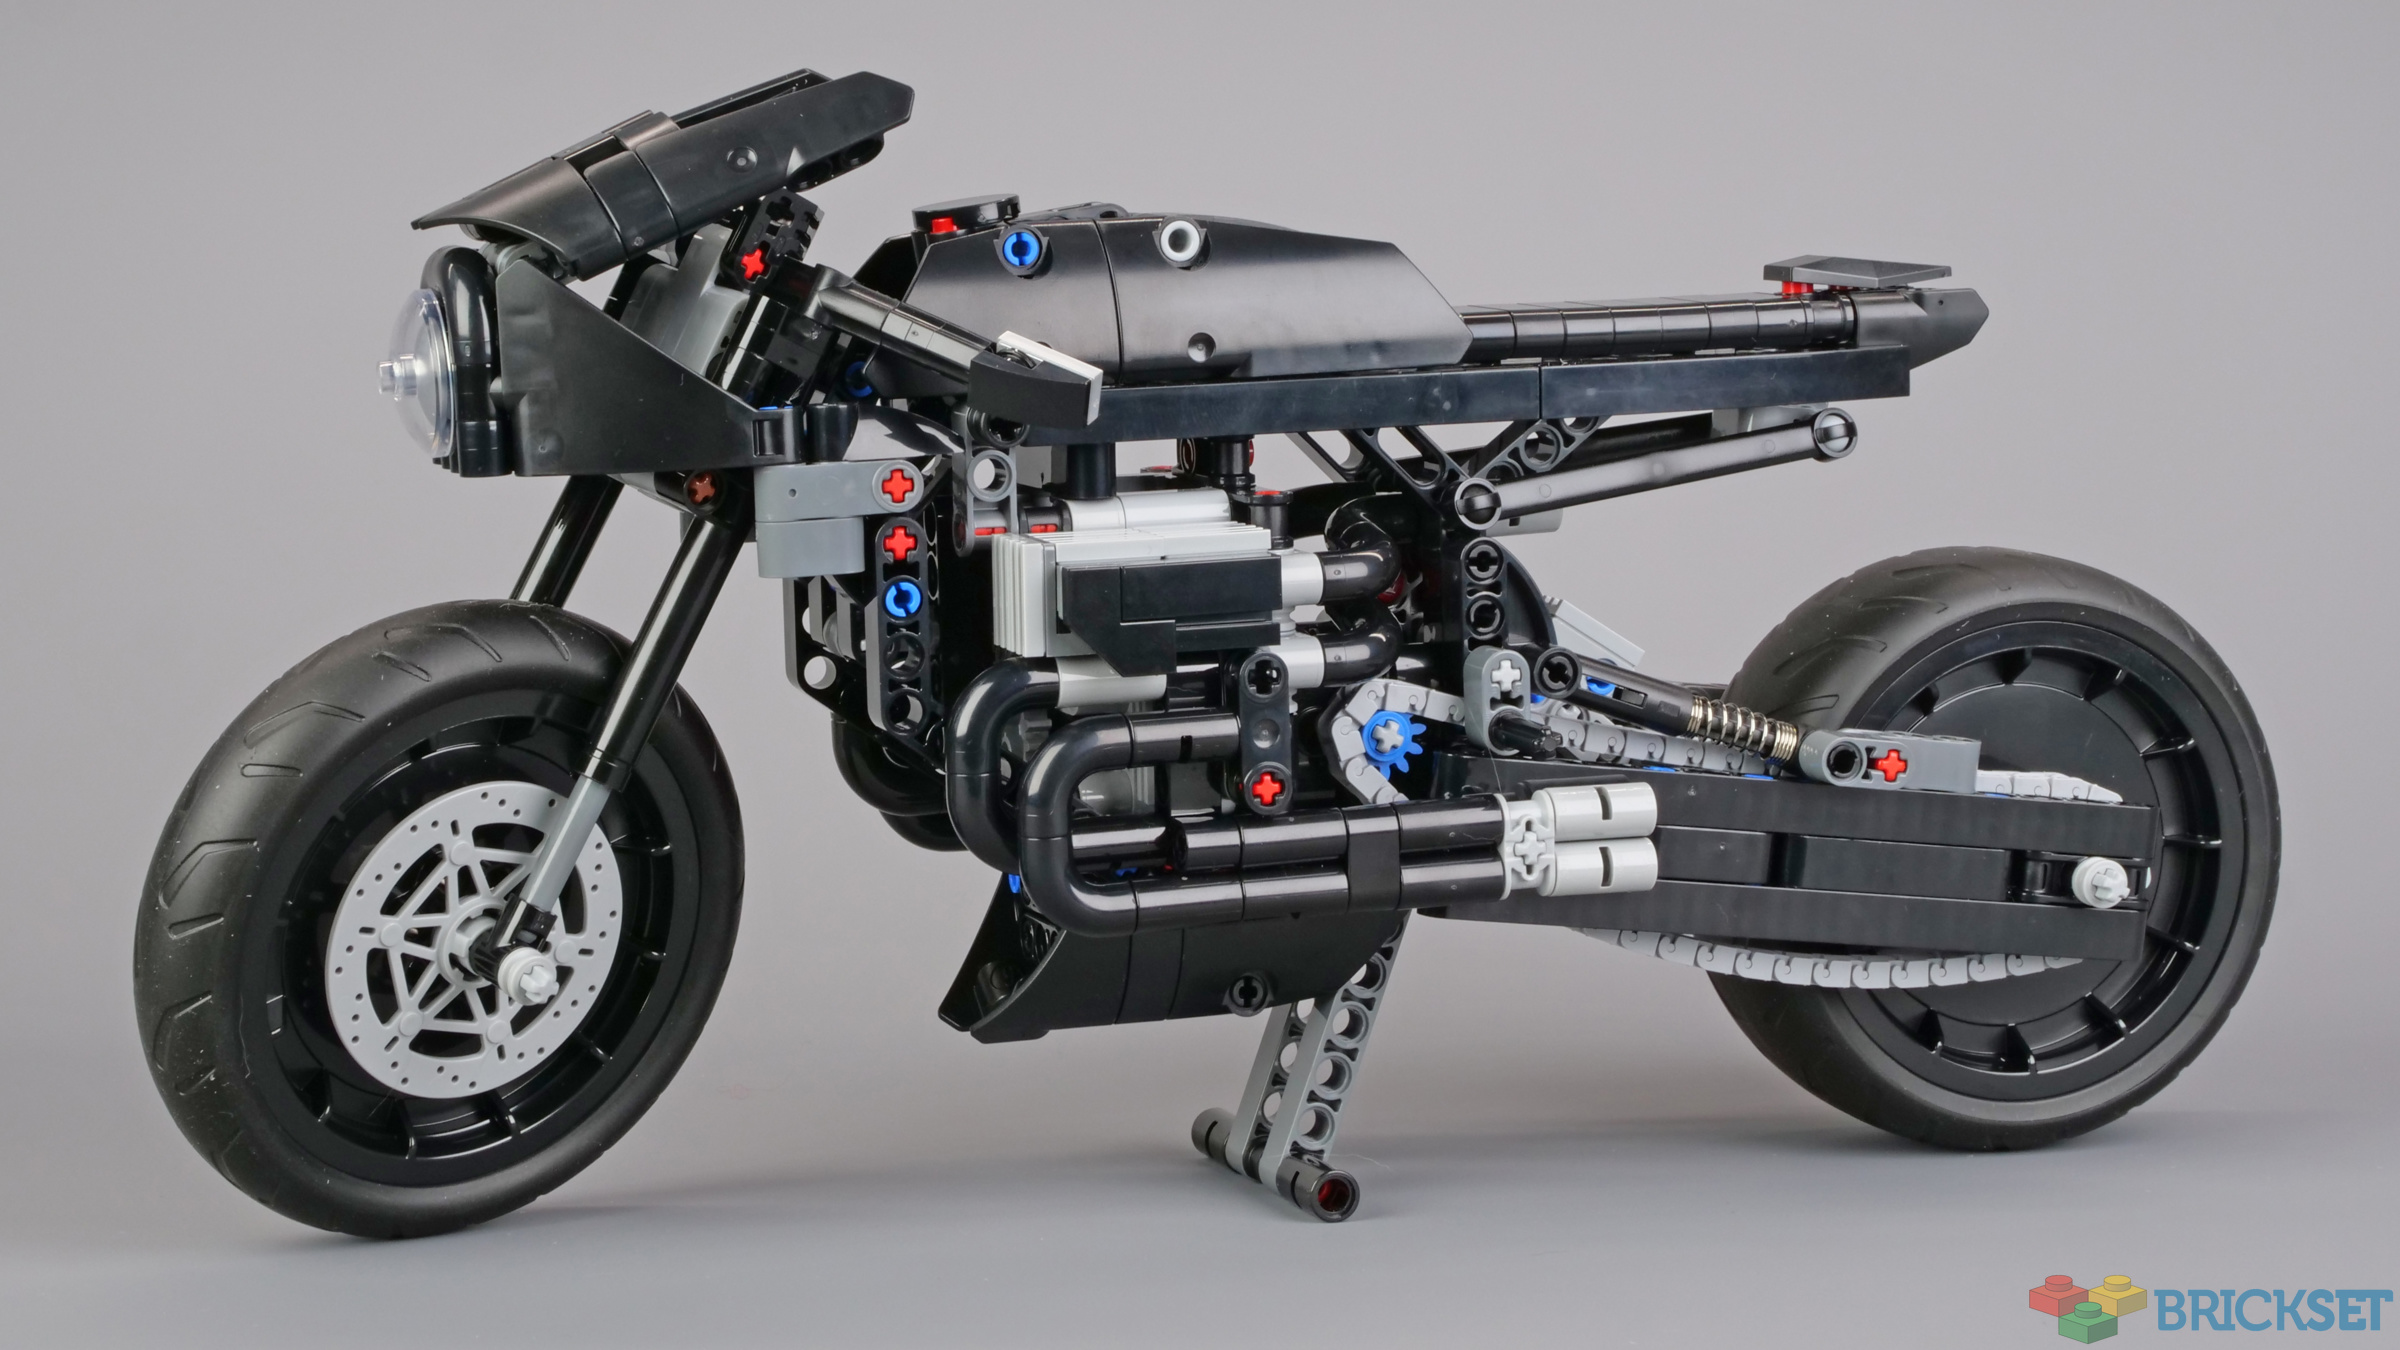 LEGO Technic 42155 The Batman - Batcycle detailed building review 